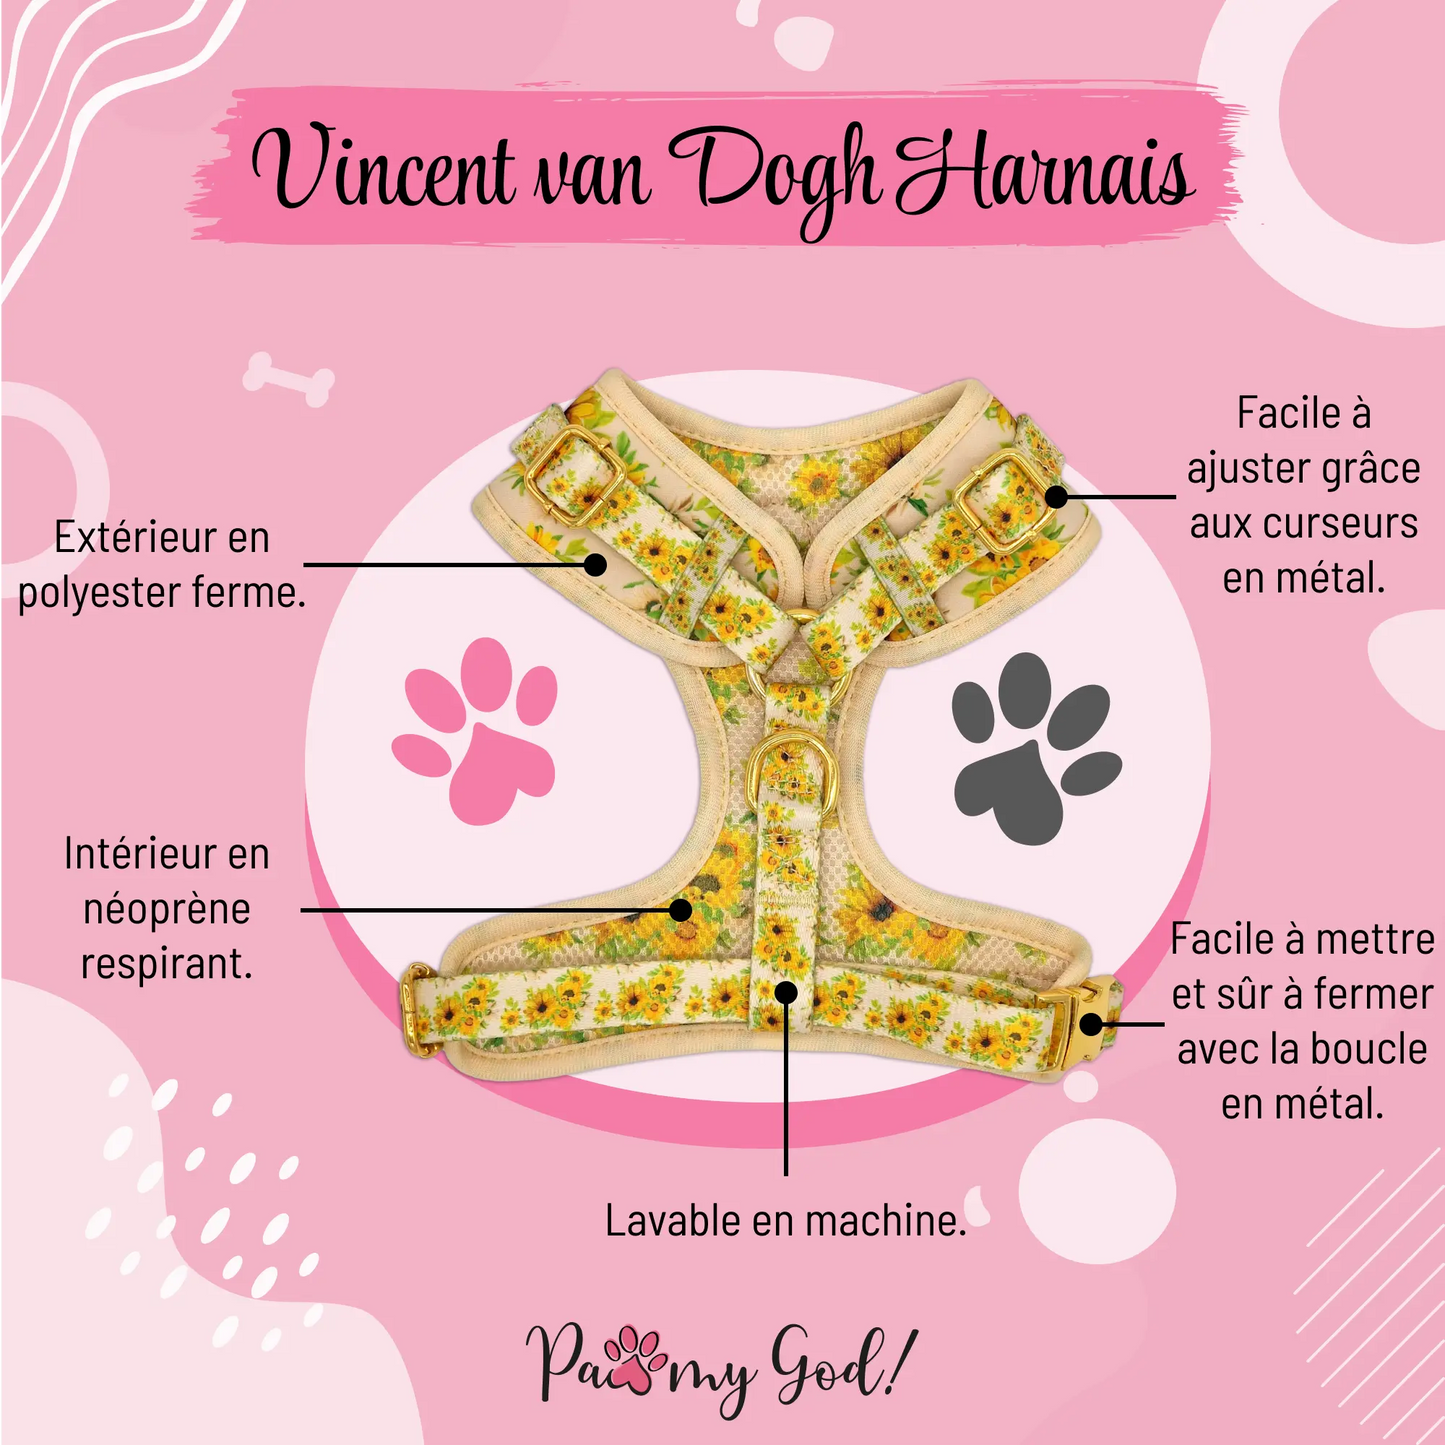 Vincent van Dogh Harness Features